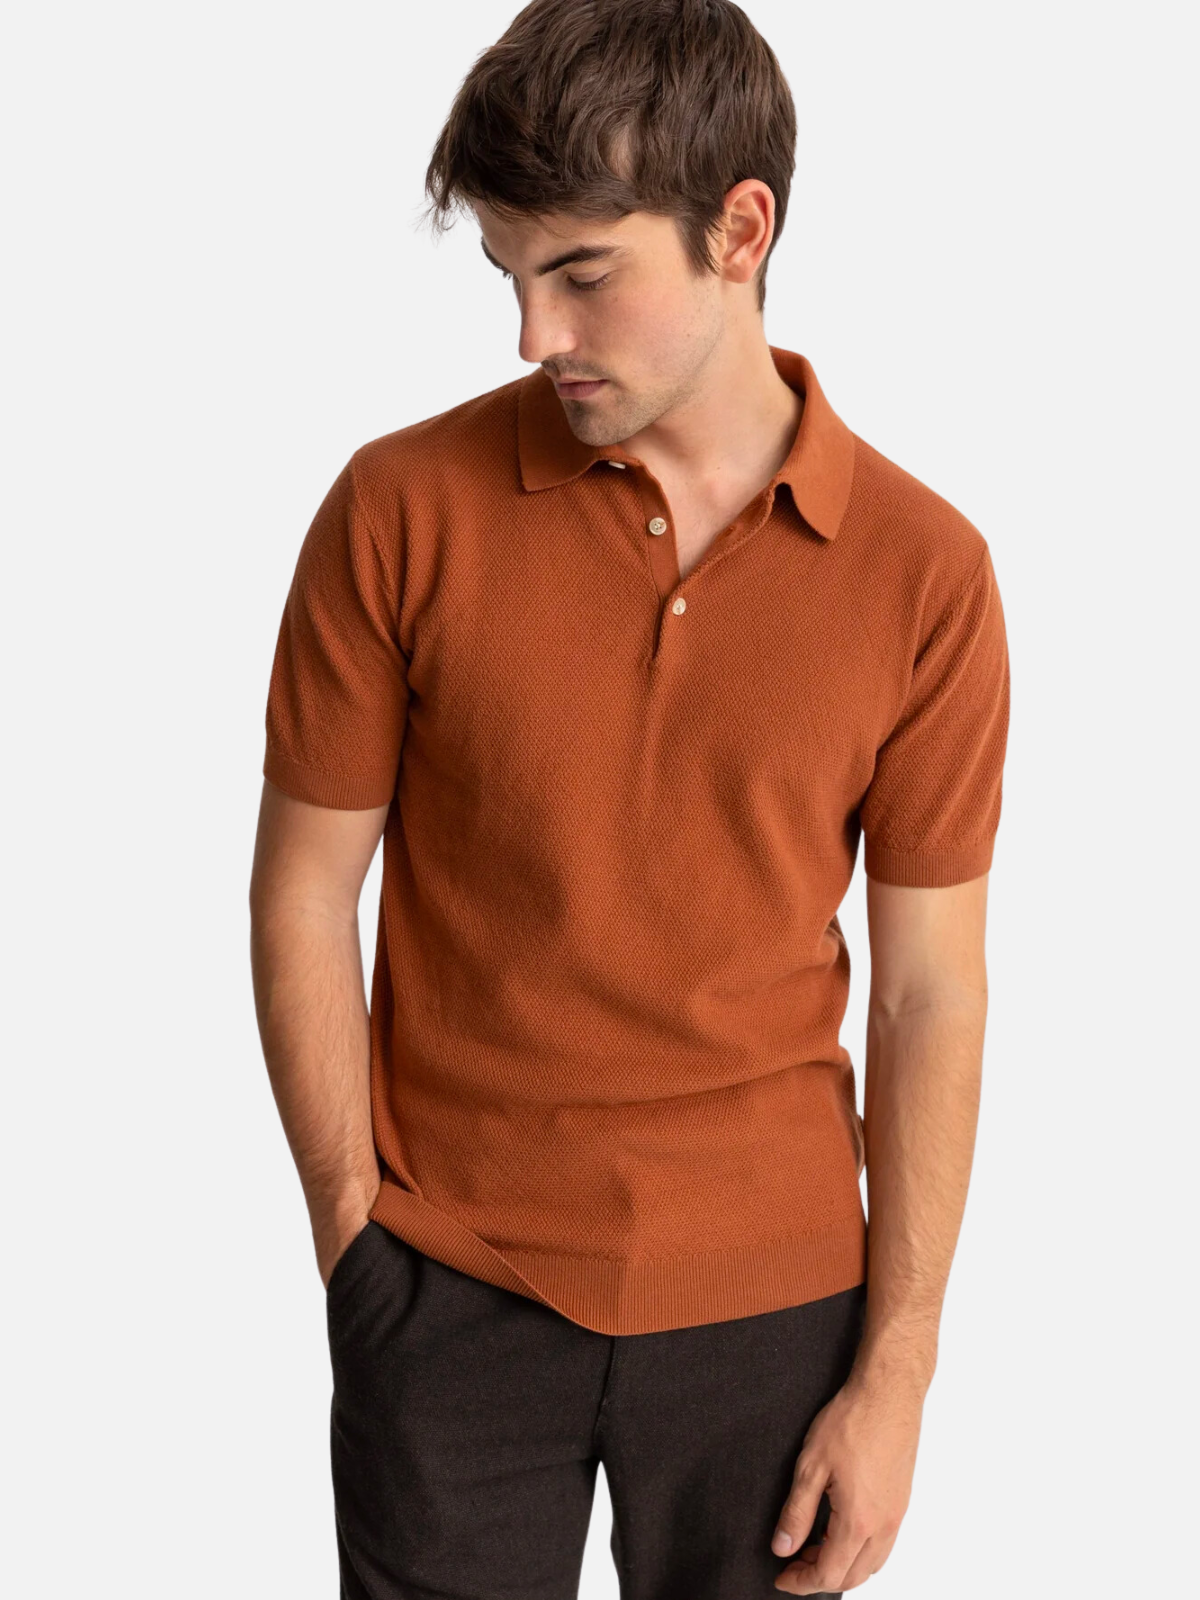 rhythm textured knit ss short sleeve sweater polo clay burnt orange 100% cotton kempt athens ga georgia men's clothing store